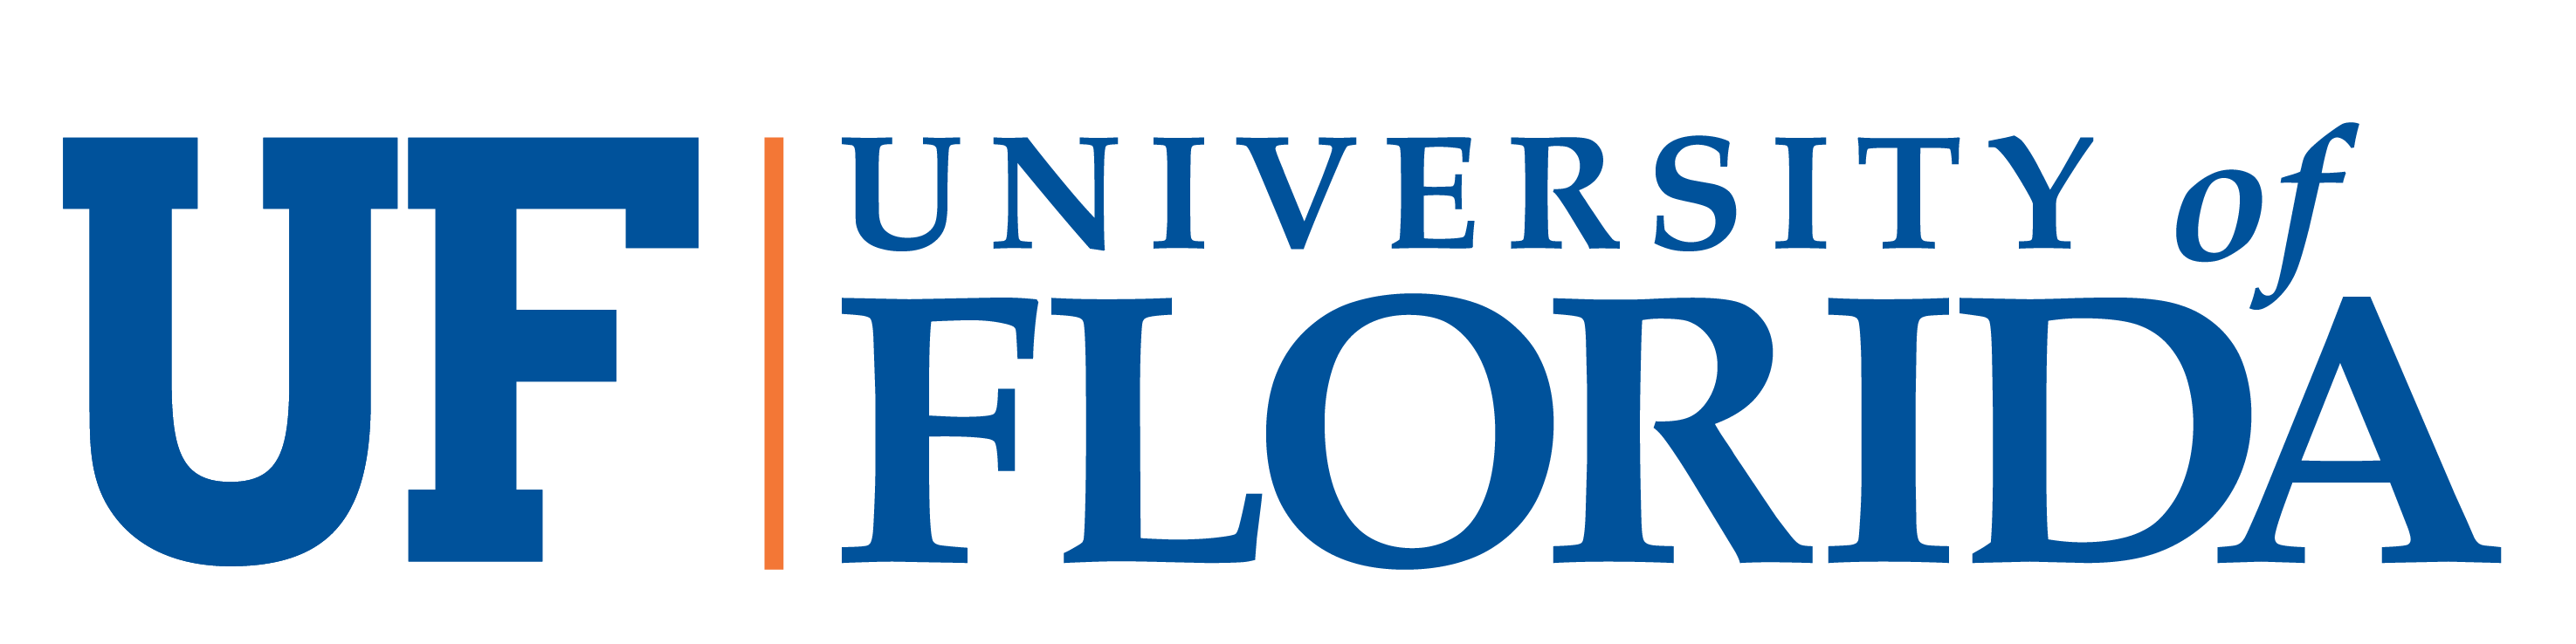 University of Florida, USA